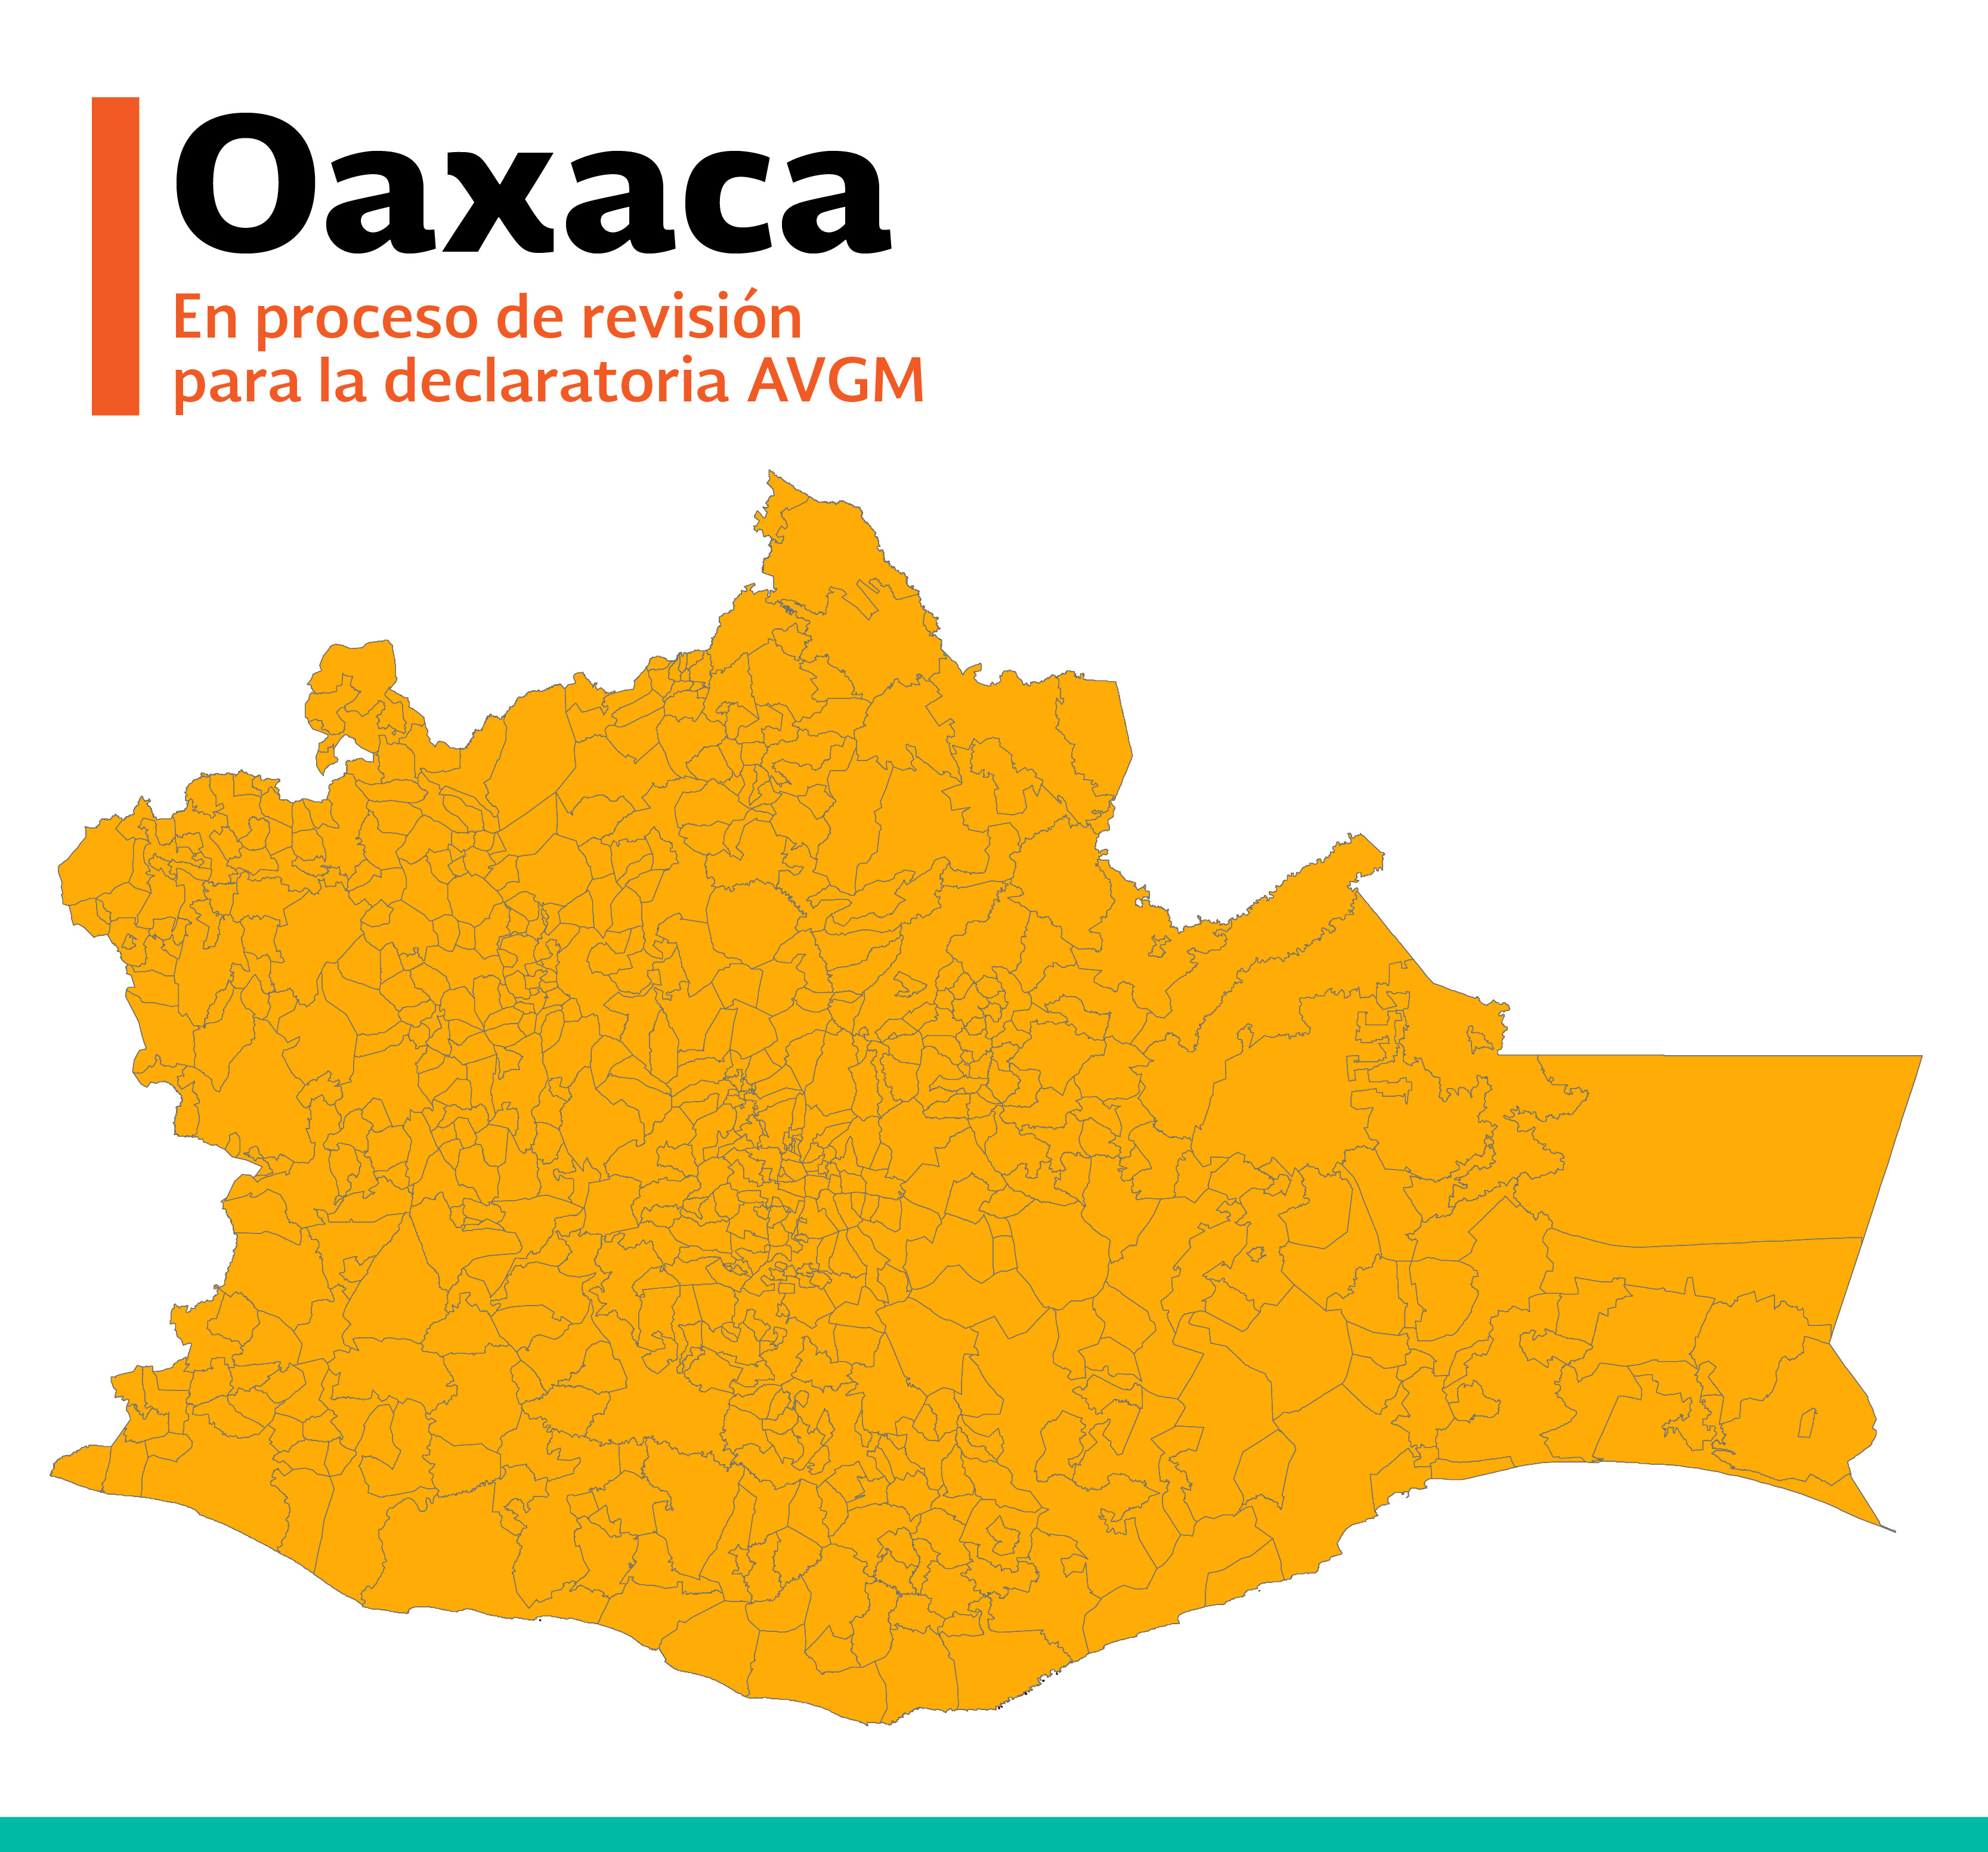 /cms/uploads/image/file/404927/Mapa_Oaxaca-26.jpg